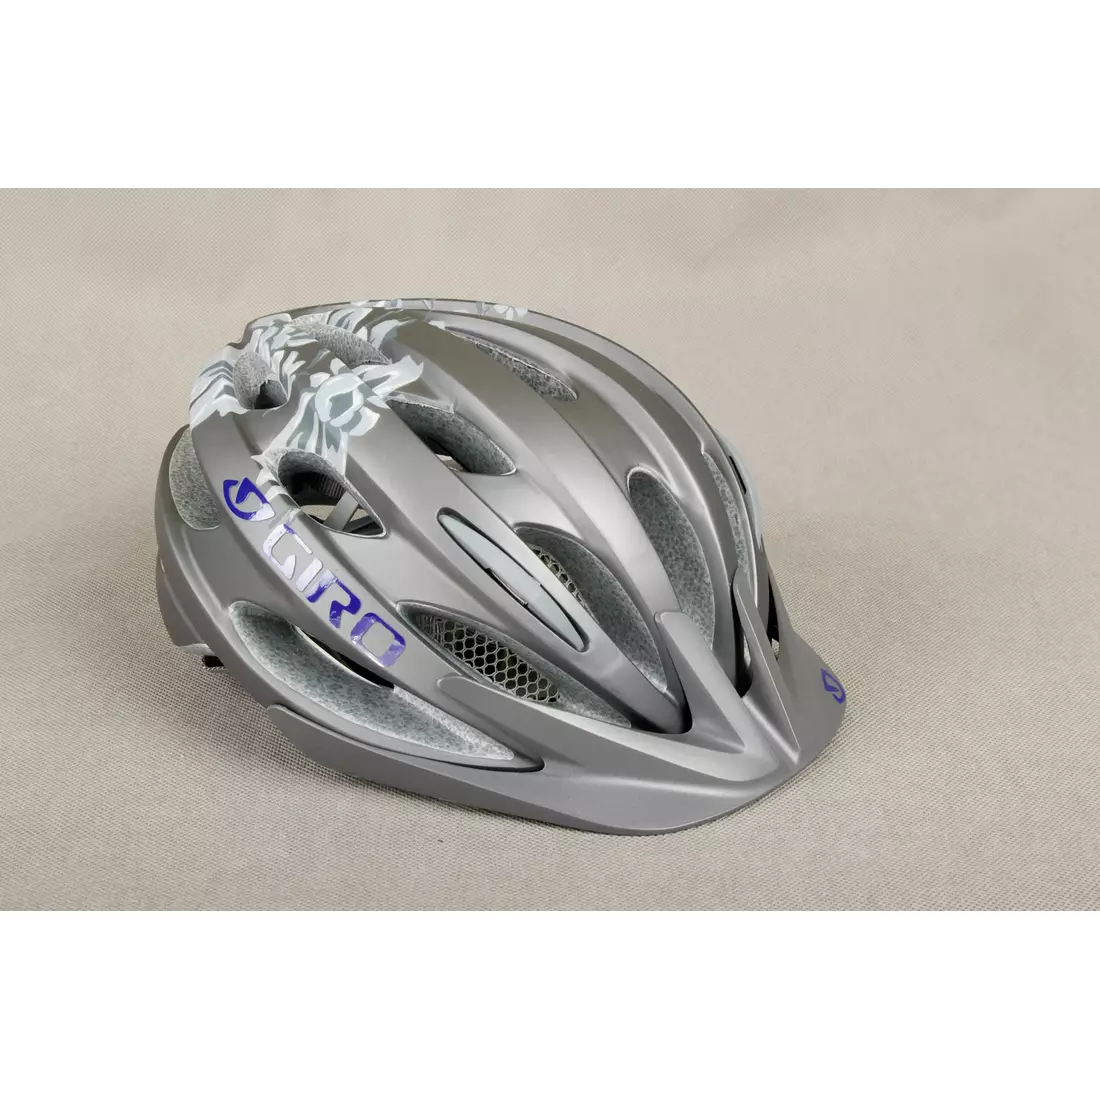 GIRO VERONA women's bicycle helmet, color: Titanium